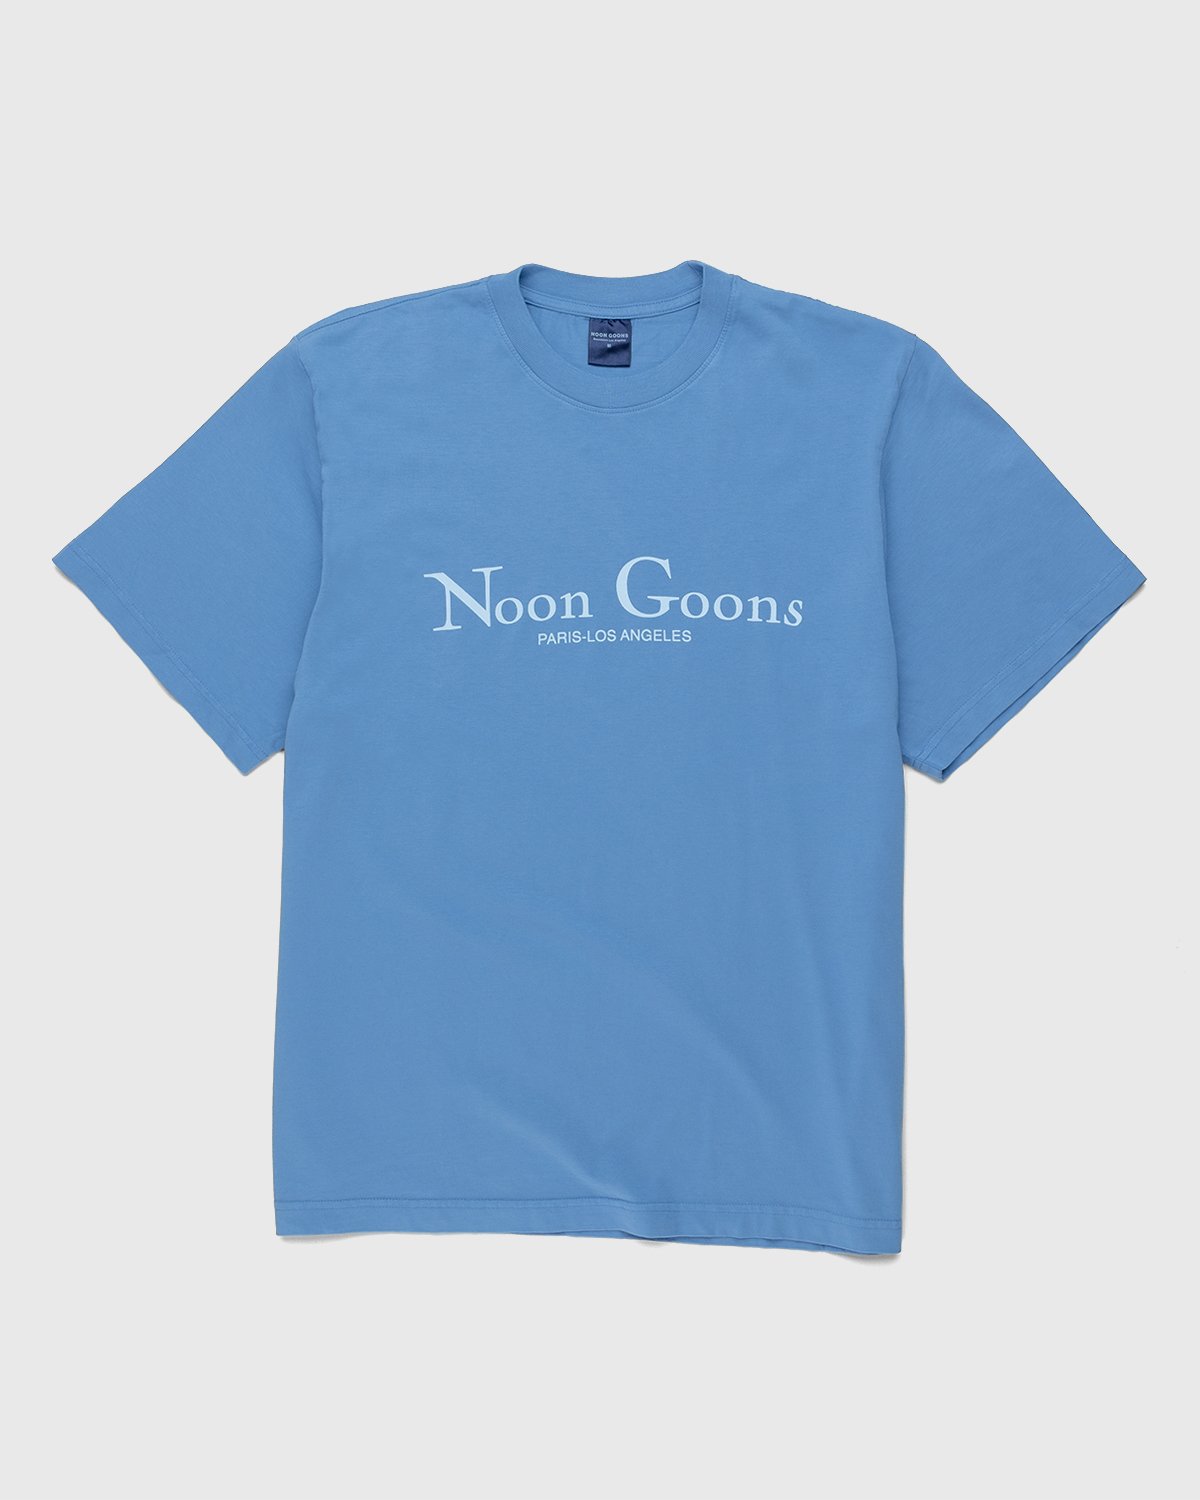 Noon Goons - Sister City T-Shirt Blue - Clothing - Blue - Image 1